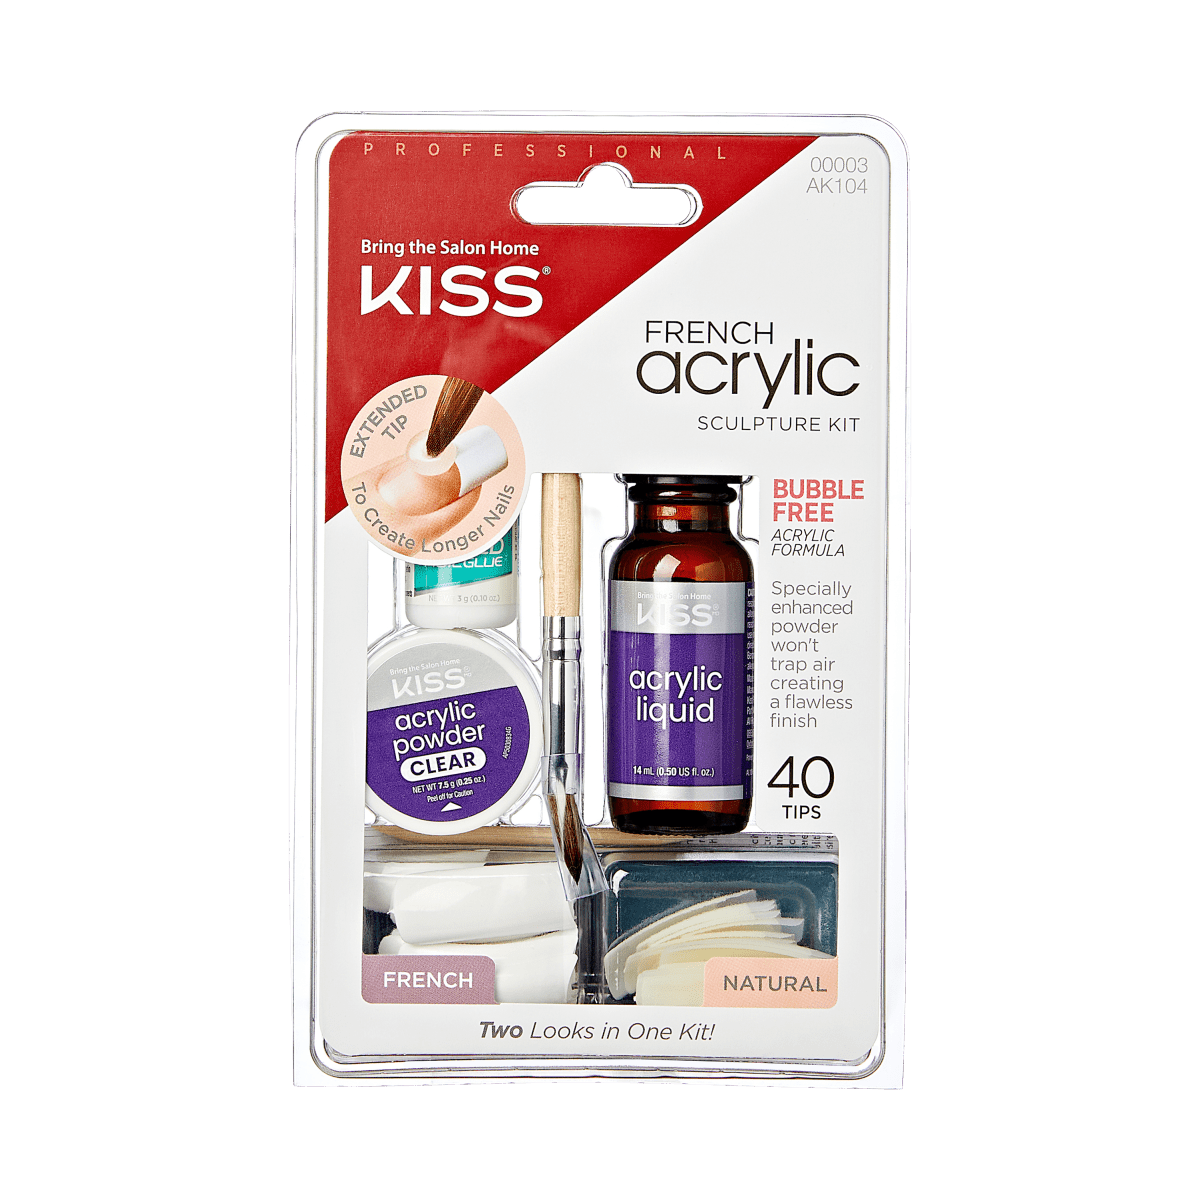 Kiss New York Essential Travel Nail Kit 6 Pieces RTM01 – Optima